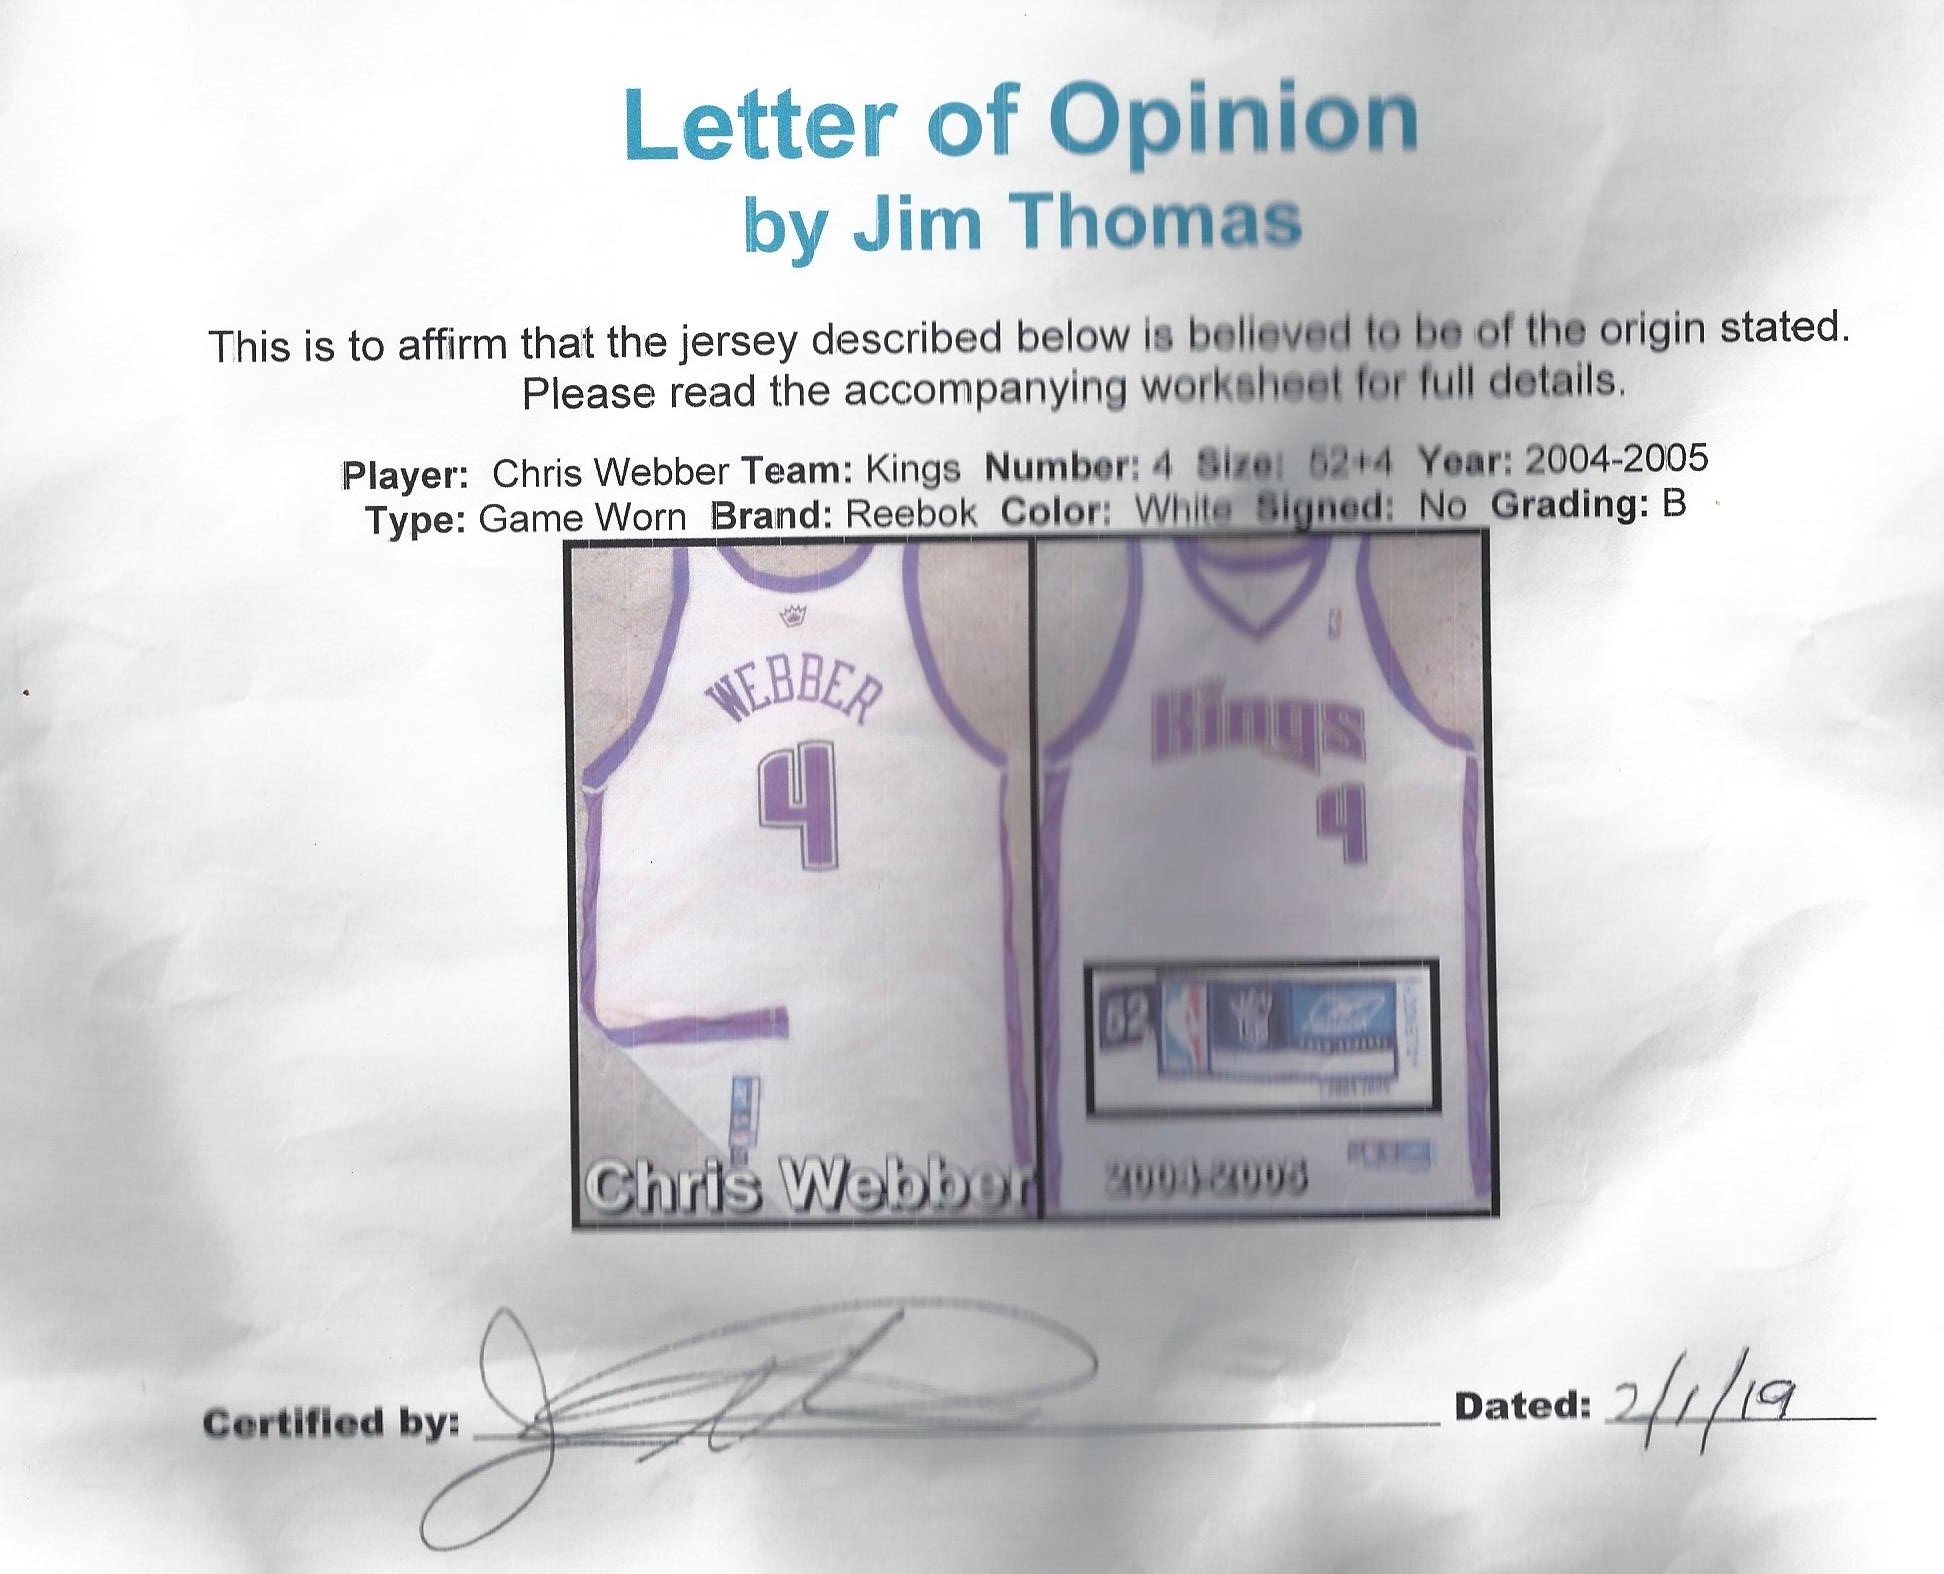 Kings retire Chris Webber's jersey - The San Diego Union-Tribune